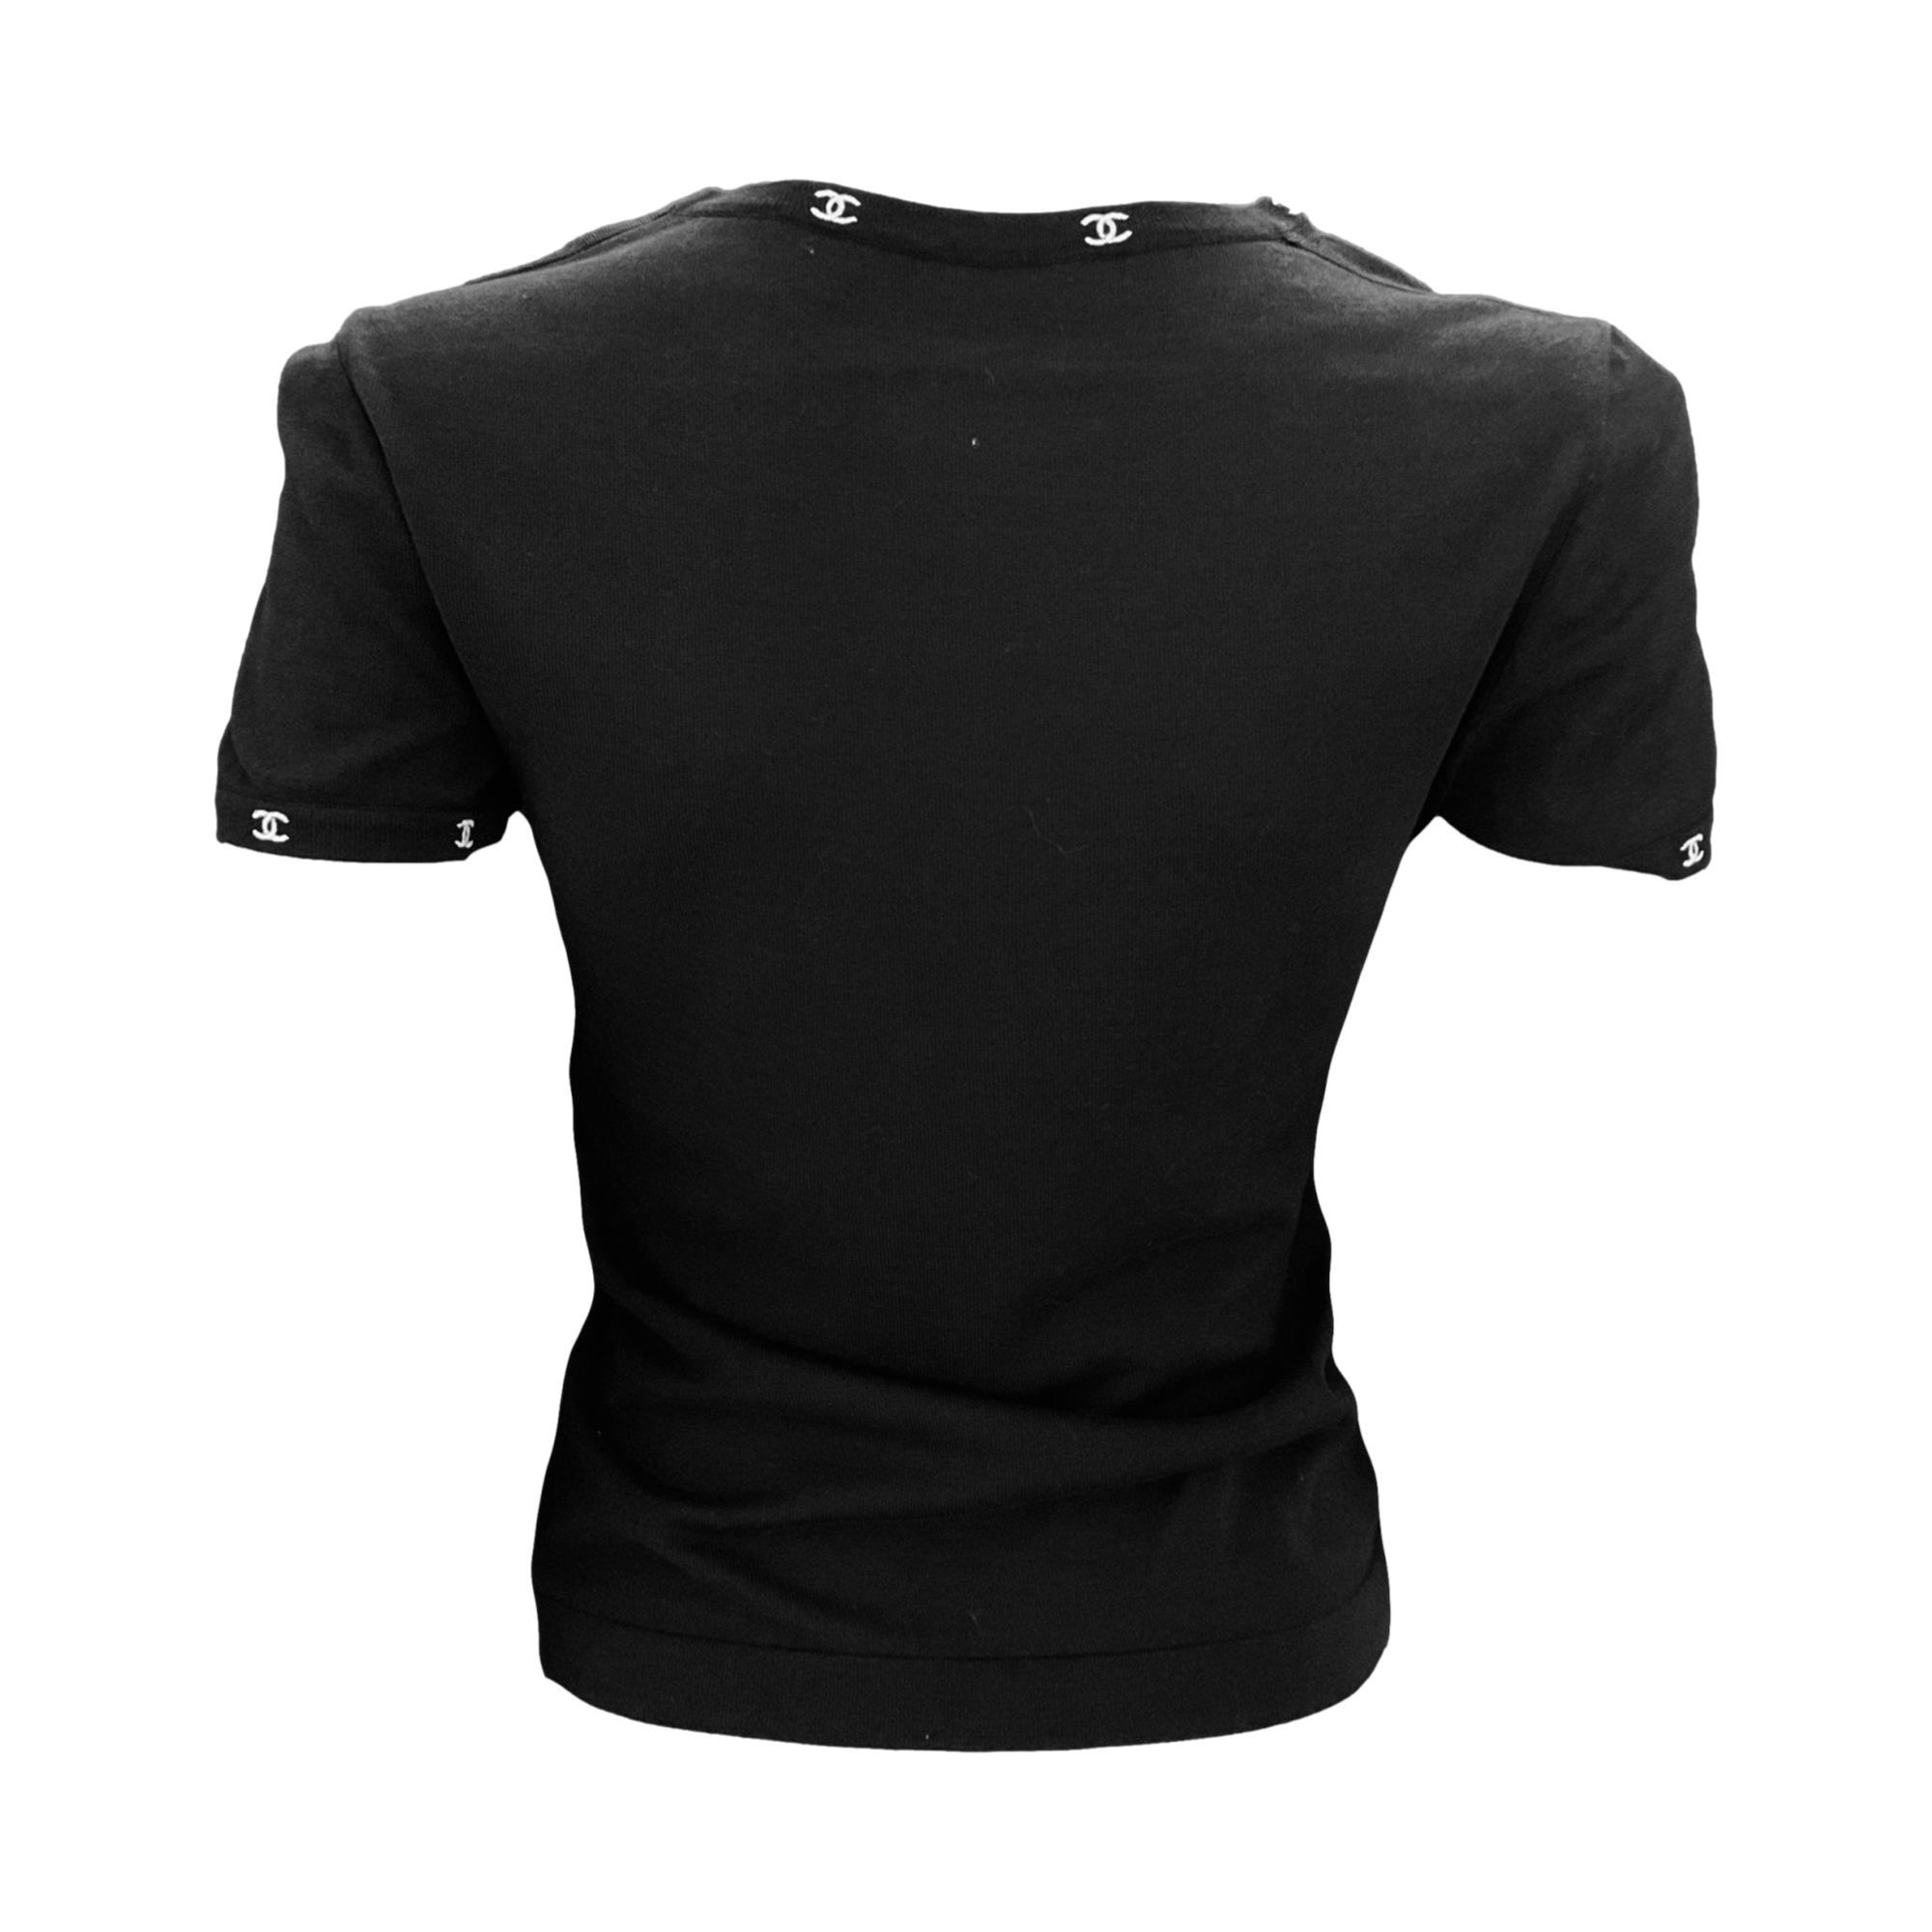 Chanel Black Logo Short Sleeve Top